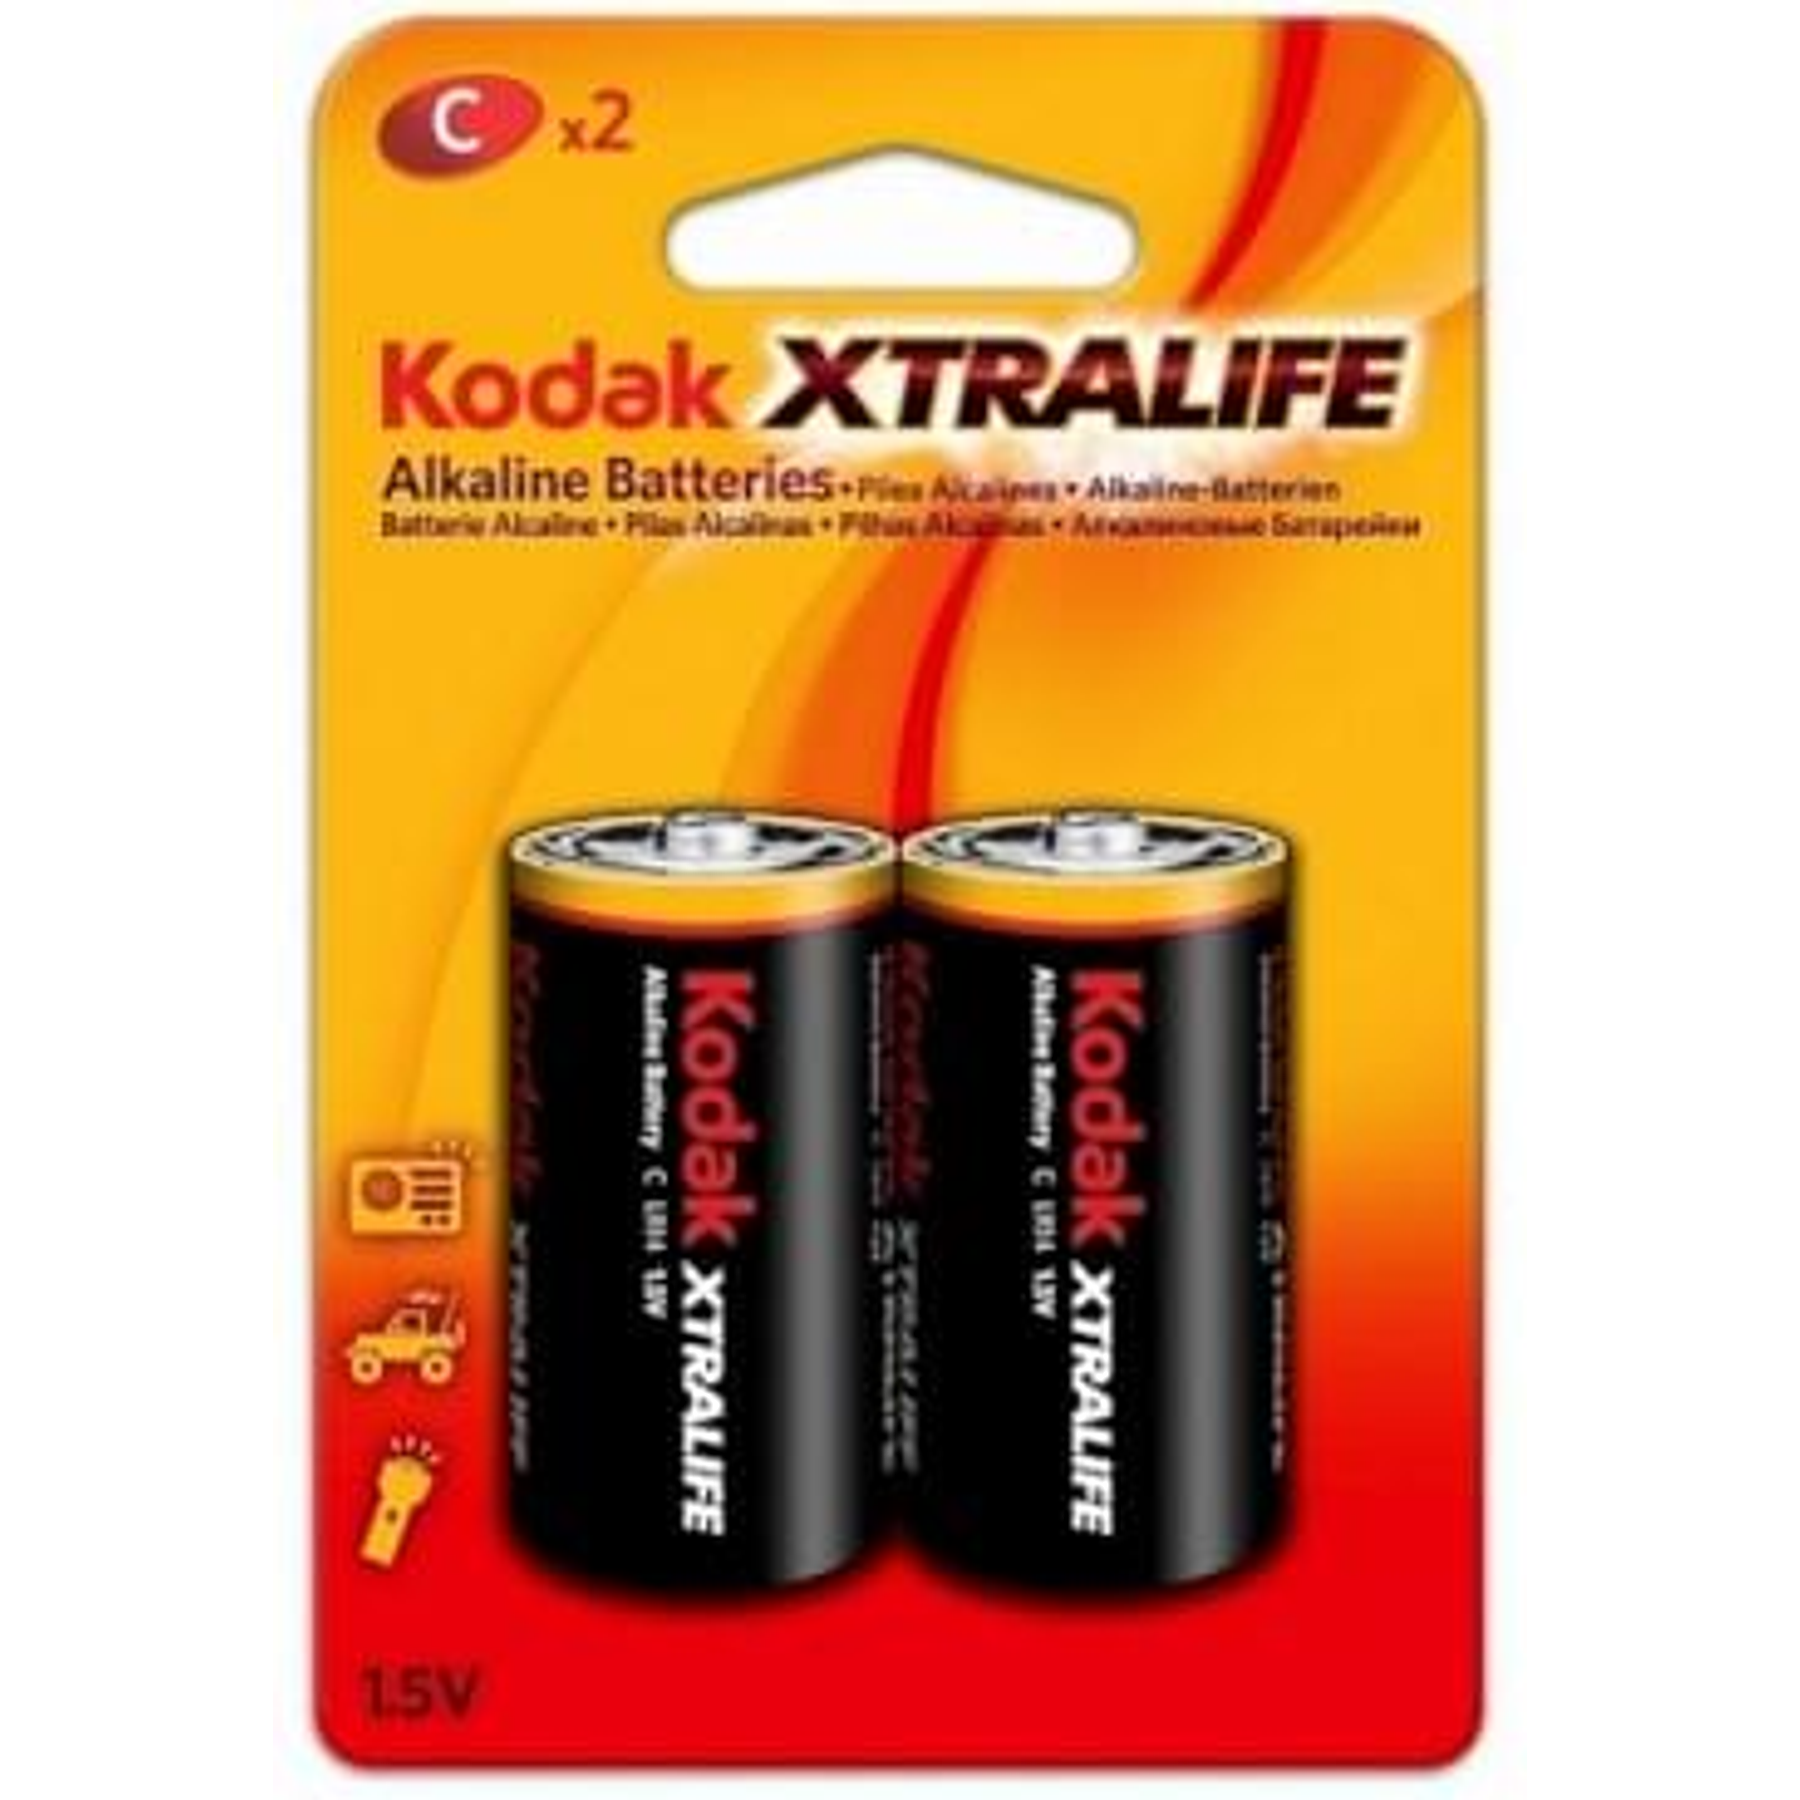 Pilhas Kodak Xtralife Alcalina LR20 D 1,5V (2)